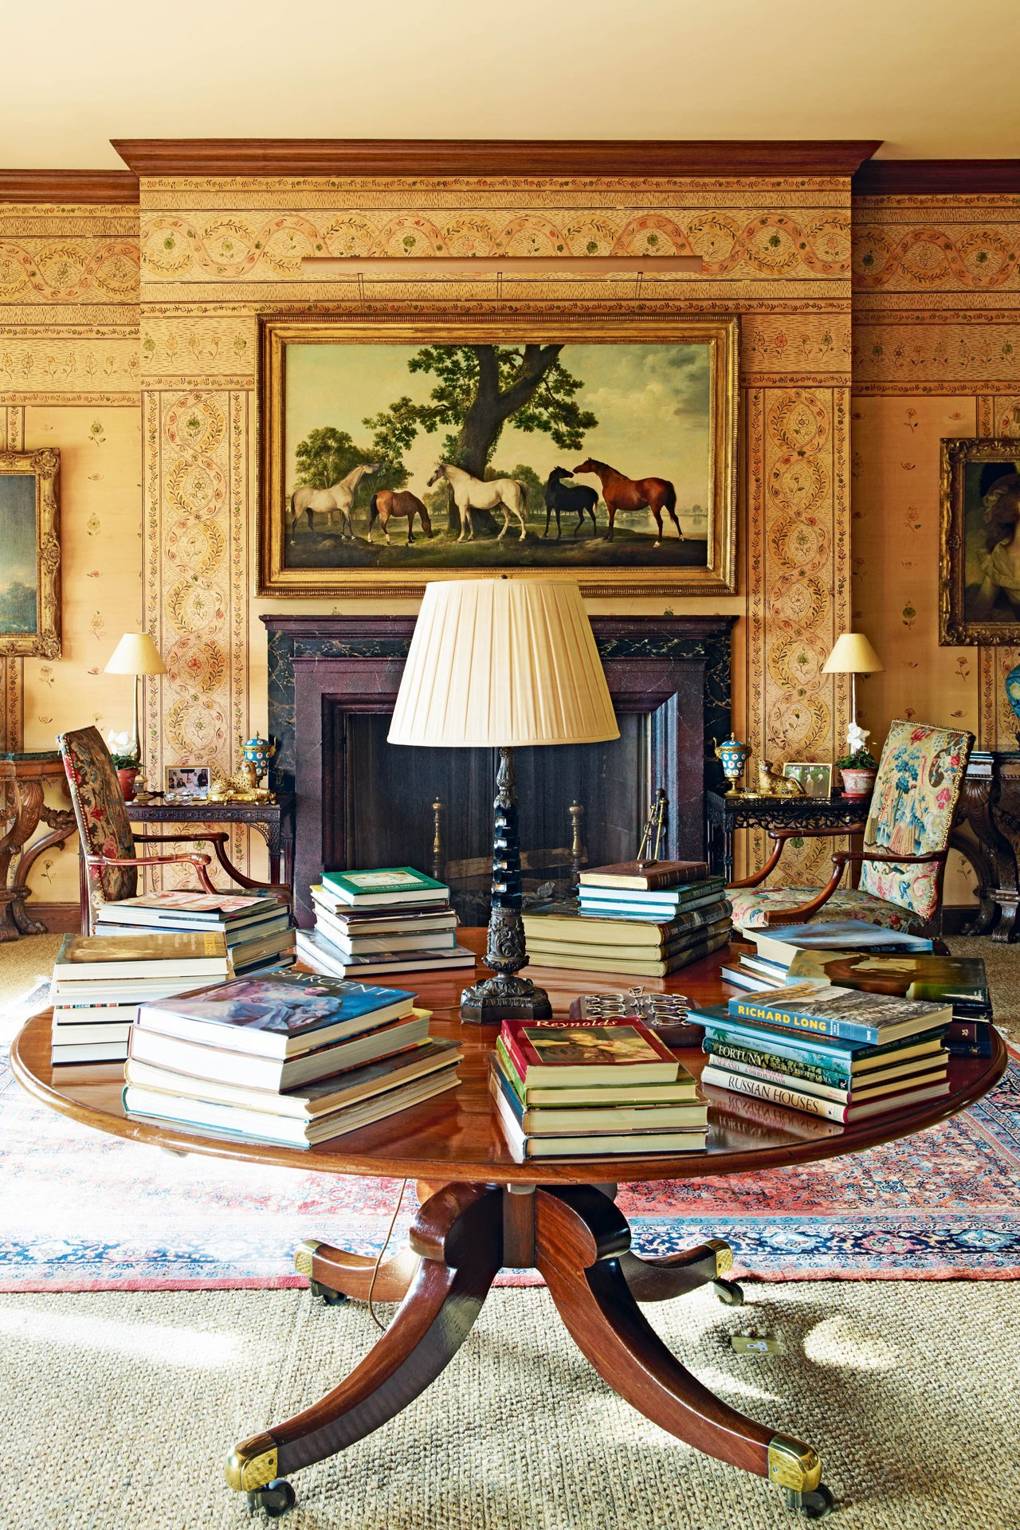 Lady de Rothschild's Ascott House, Buckinghamshire